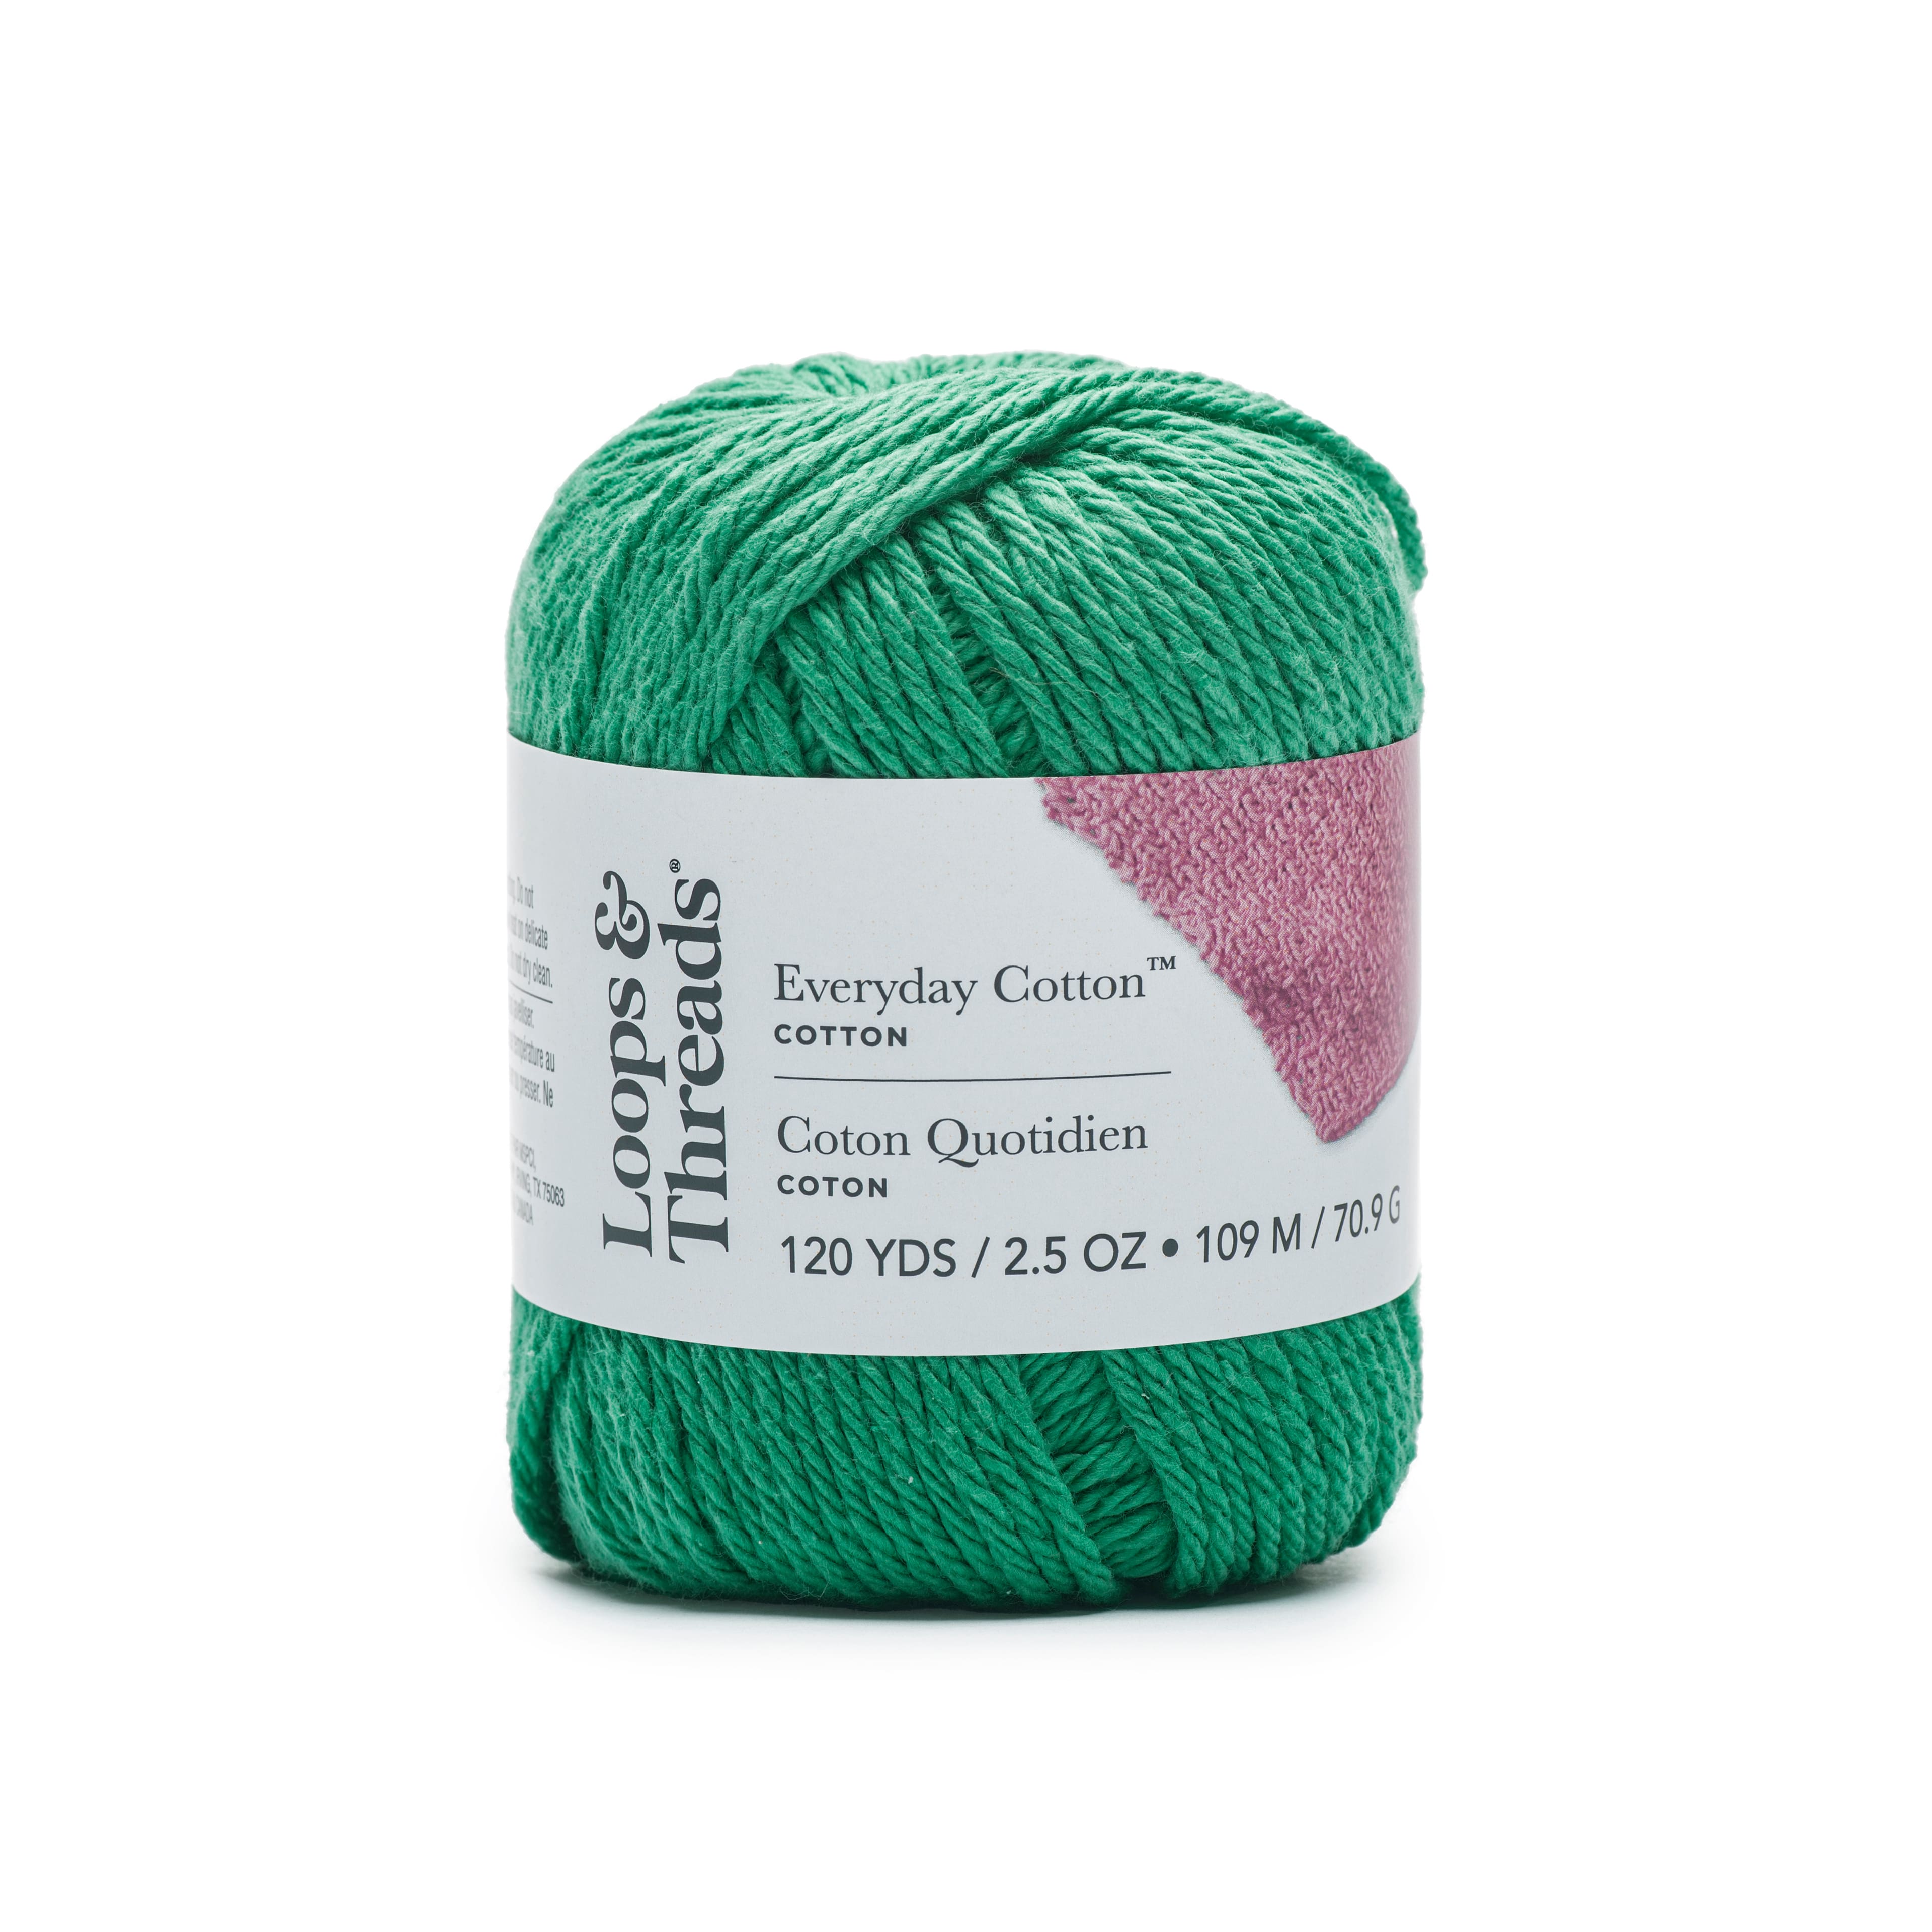 Wool yarn,100% natural, knitting - crochet - craft supplies, light